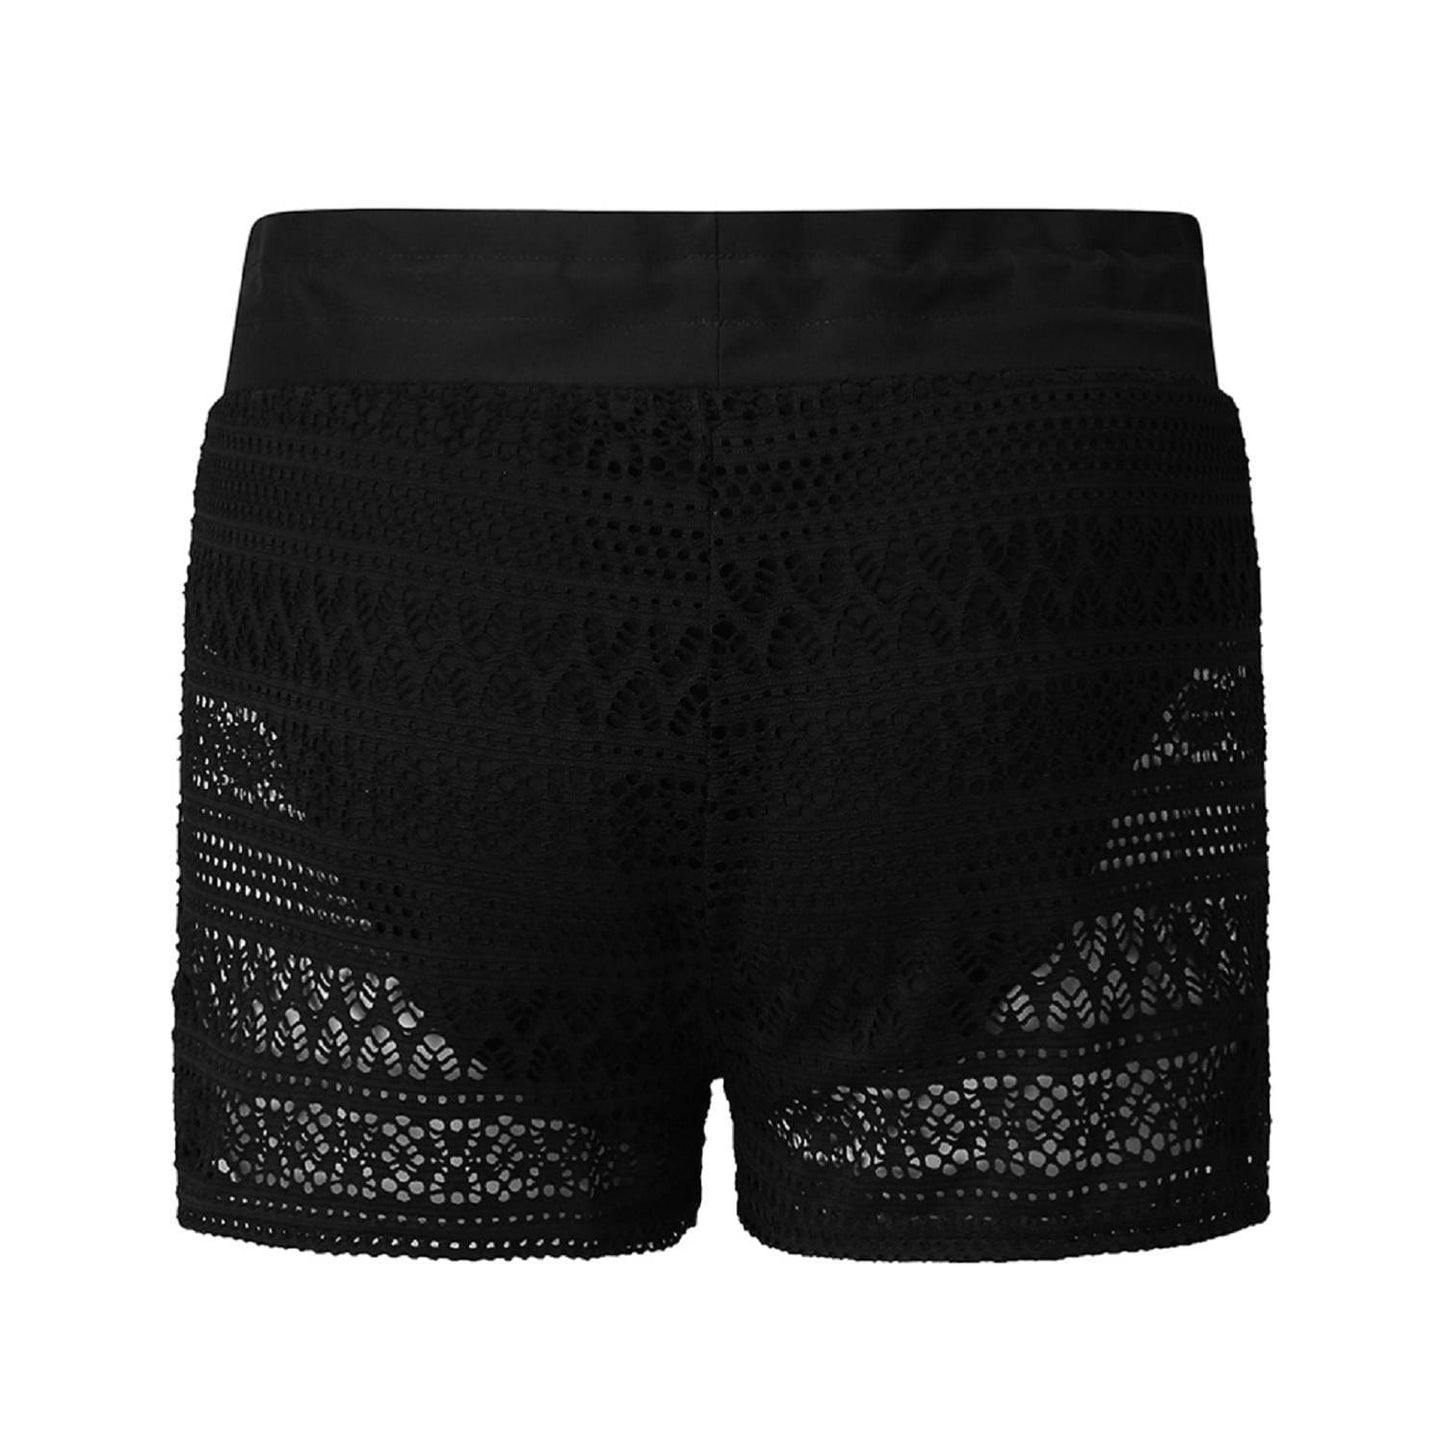 2020 swimming trunks female black jacquard lace shorts ladies four pole swimming trunks hot spring swimming shorts single piece set